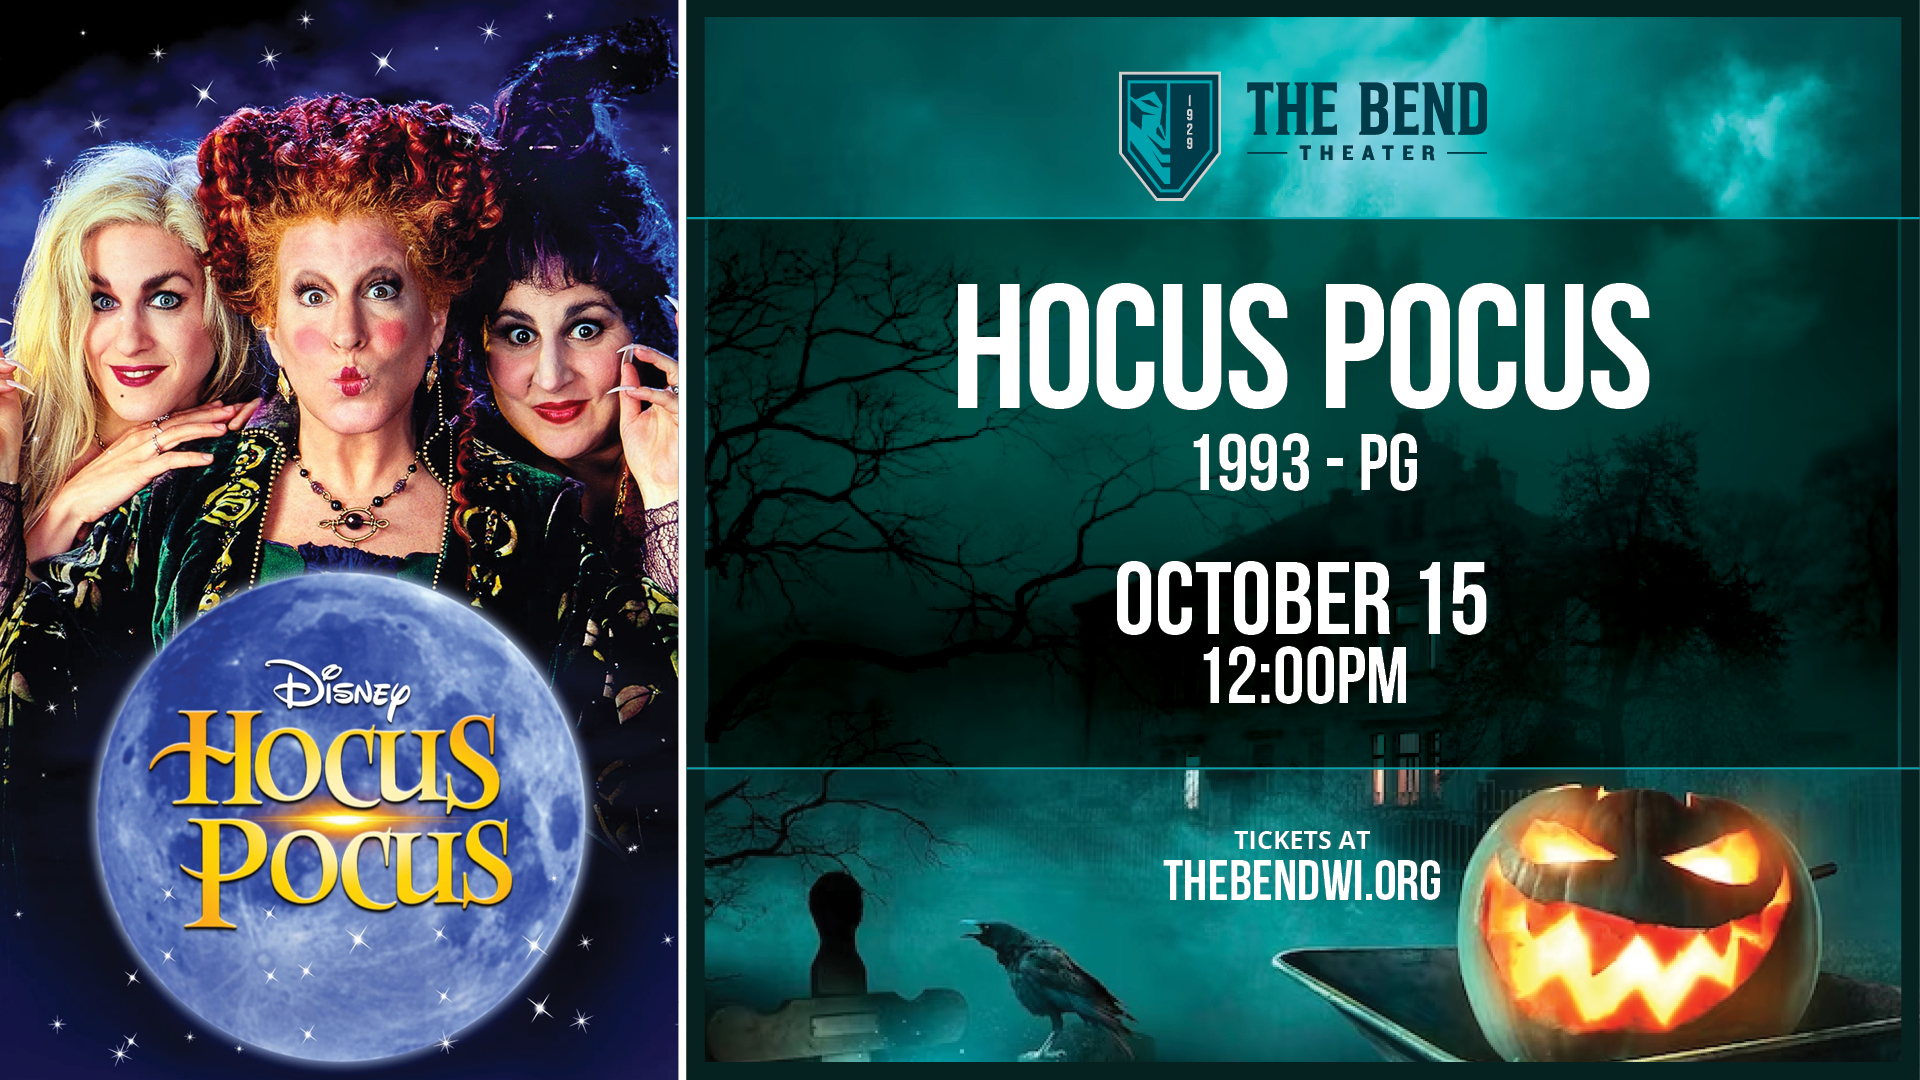 Hocus Pocus at The Bend Theater